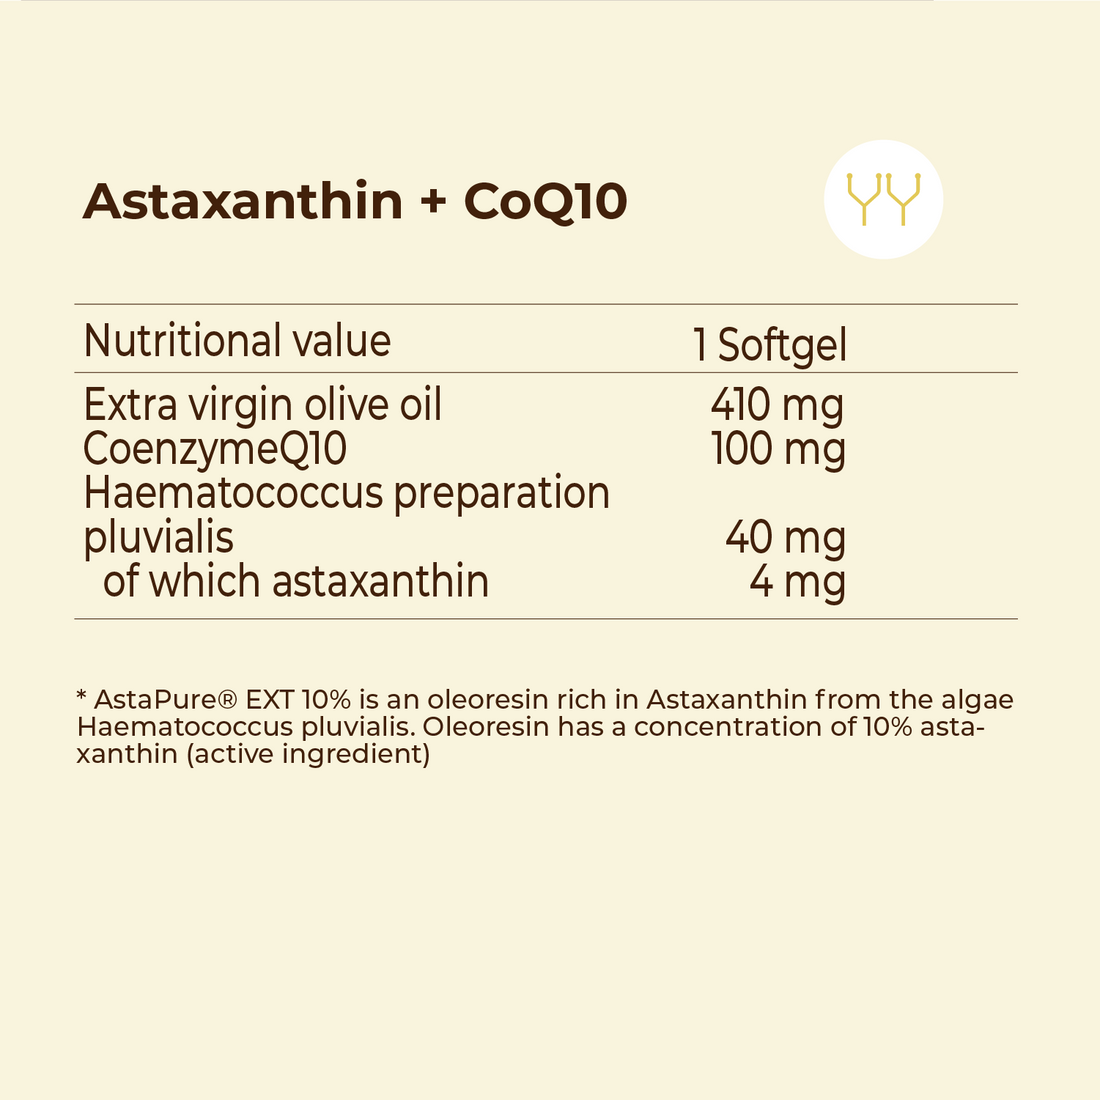 Astaxanthin + CoQ10